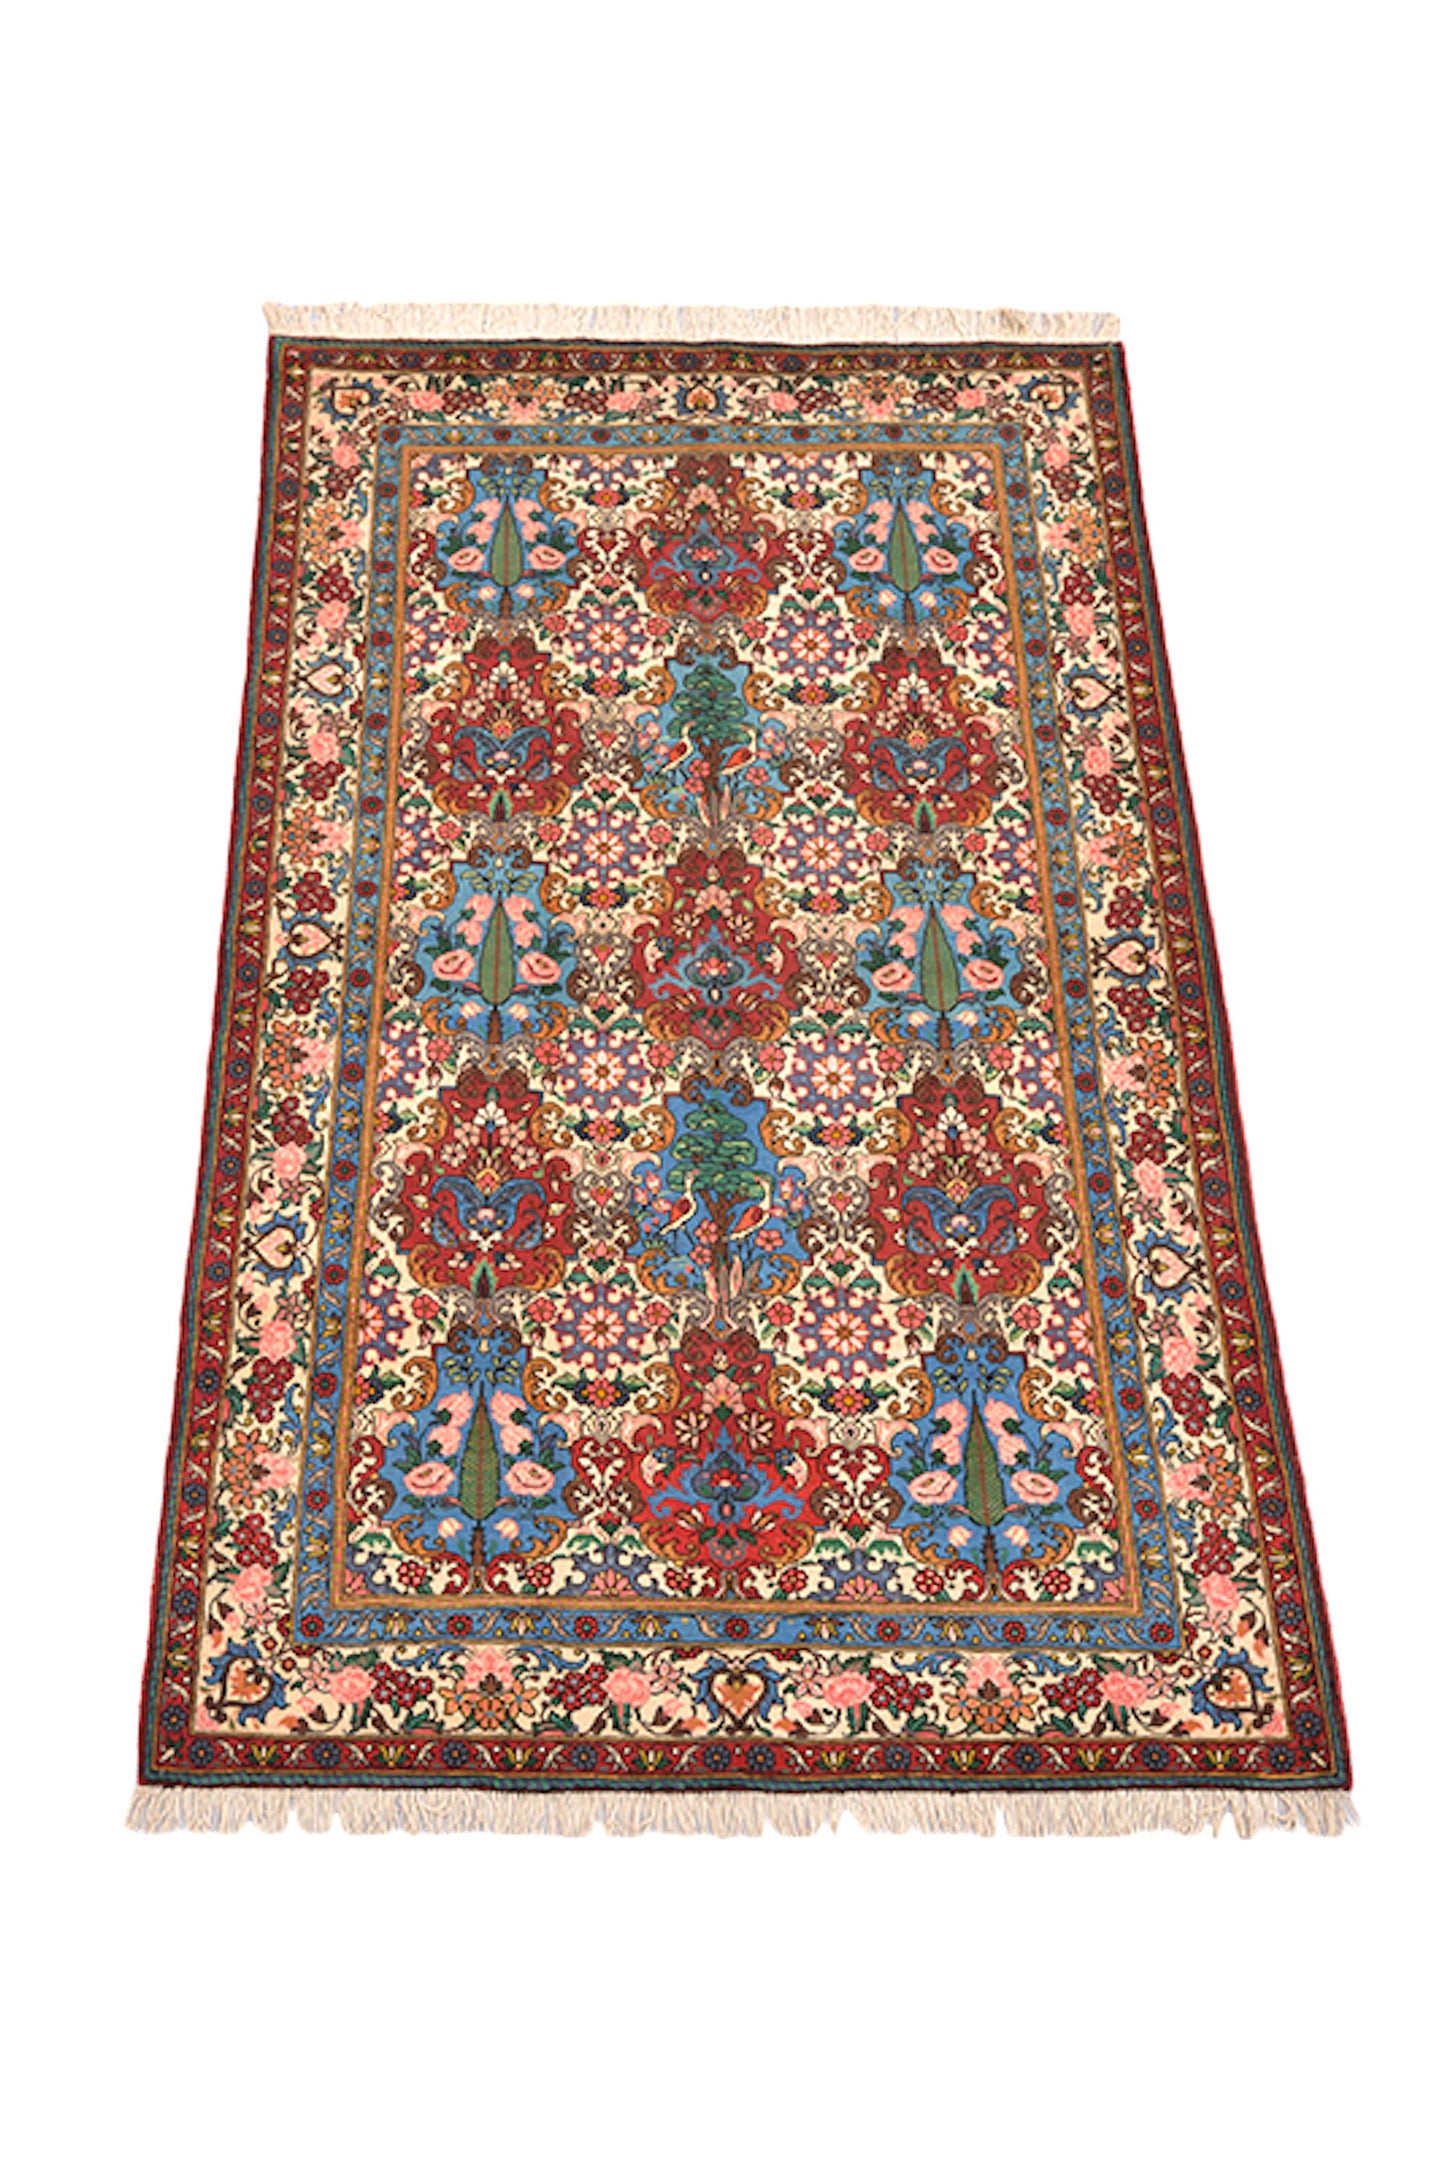 5 x 8 Colorful Floral Trellis Rug | Handmade Oriental Area Rug | Persian Caucasian Rug